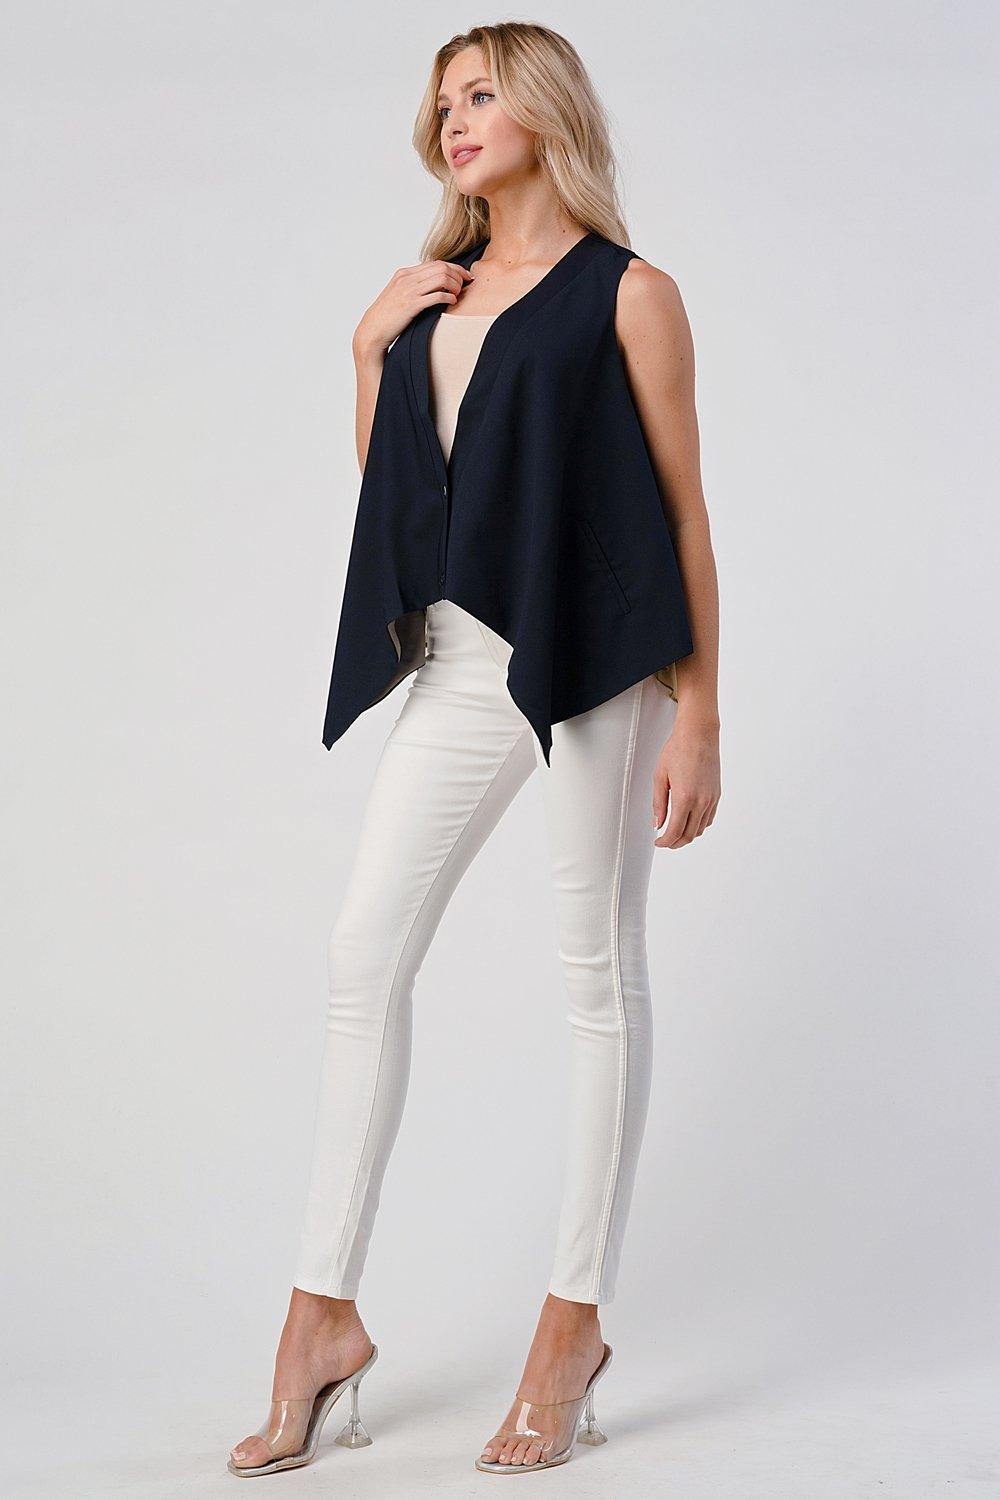 Women's Silk Contrast Fashion Vest - Brand My Case